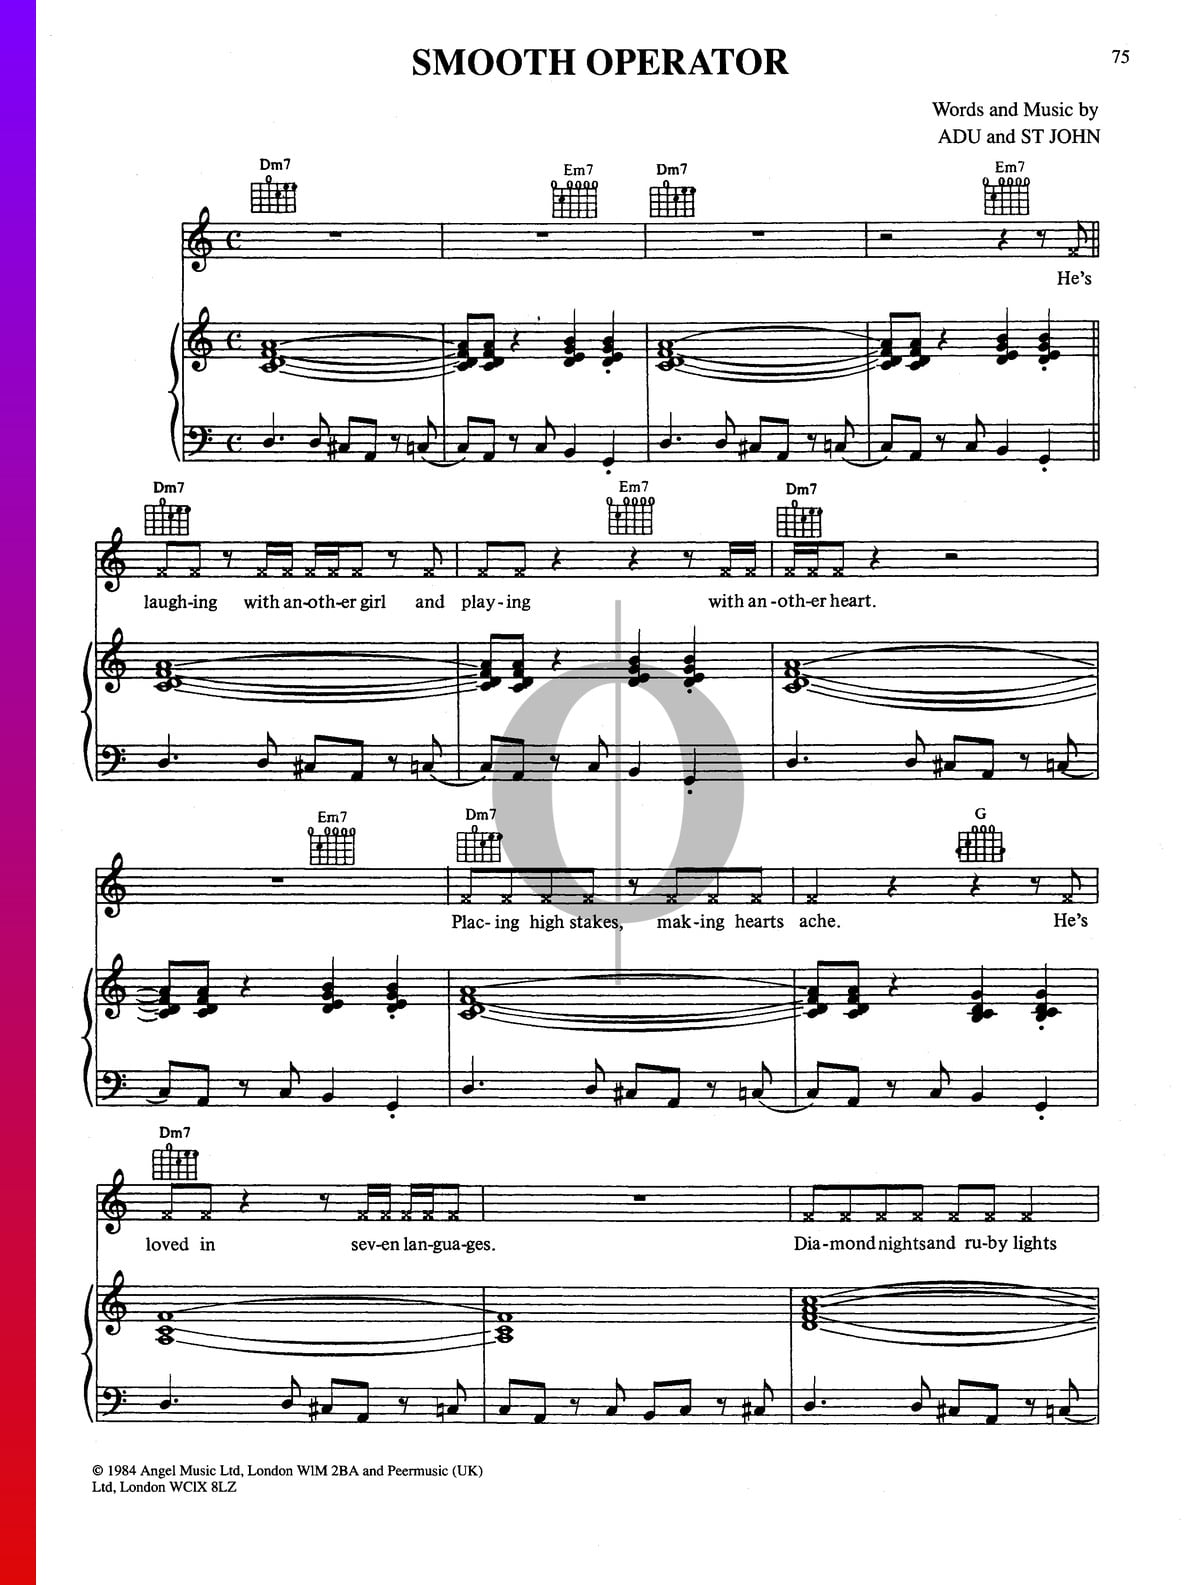 Smooth Operator (Advanced Level) (Sade) - Clarinet Sheet Music